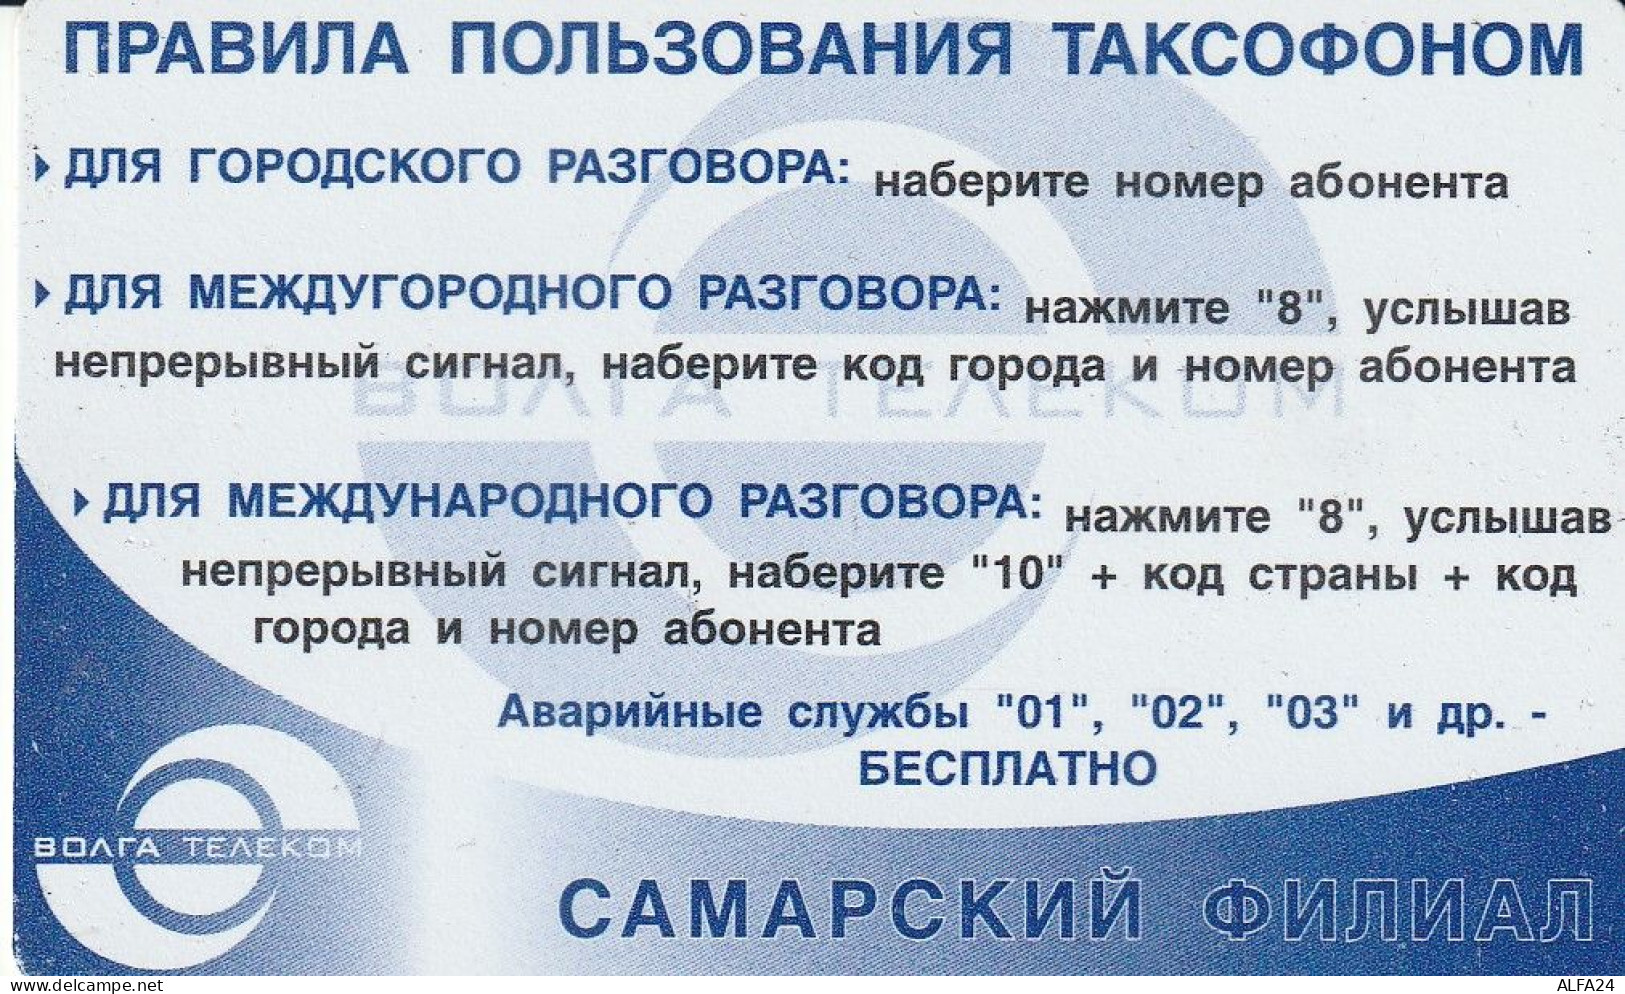 PHONE CARD RUSSIA Samara (E9.2.2 - Rusland